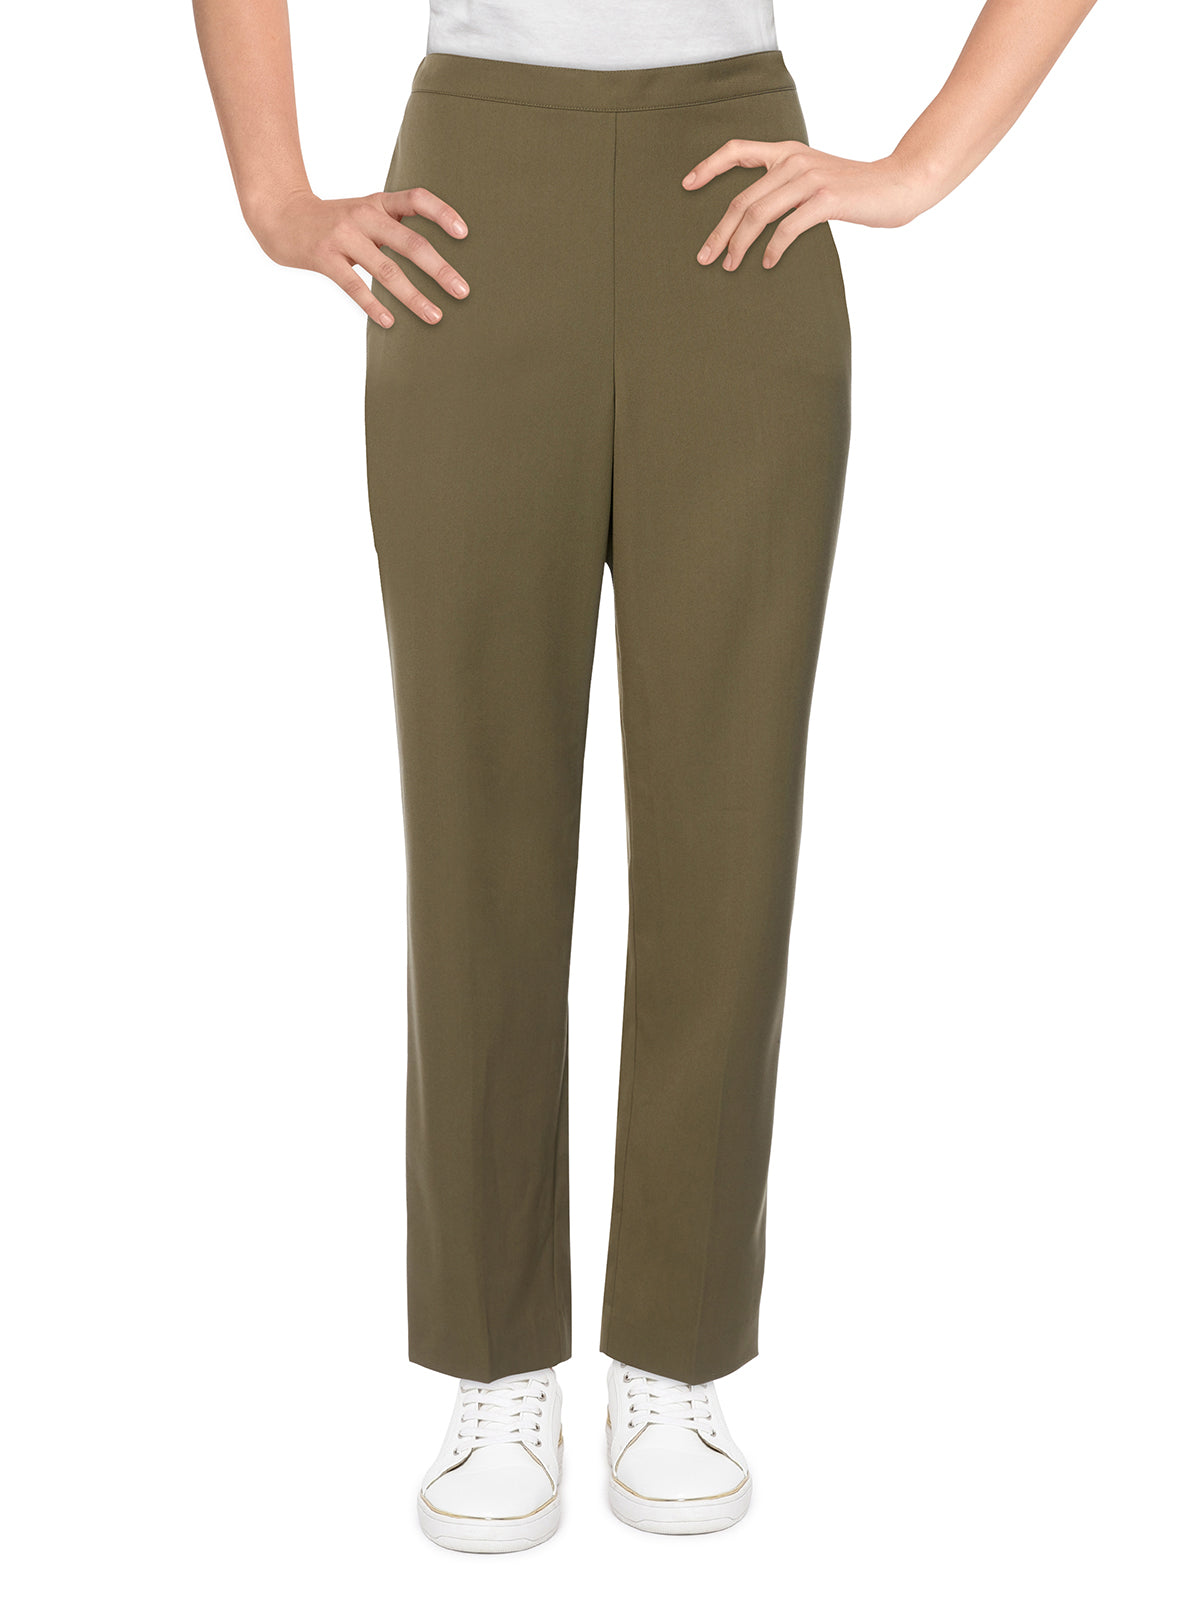 San Antonio Proportioned Short Pant